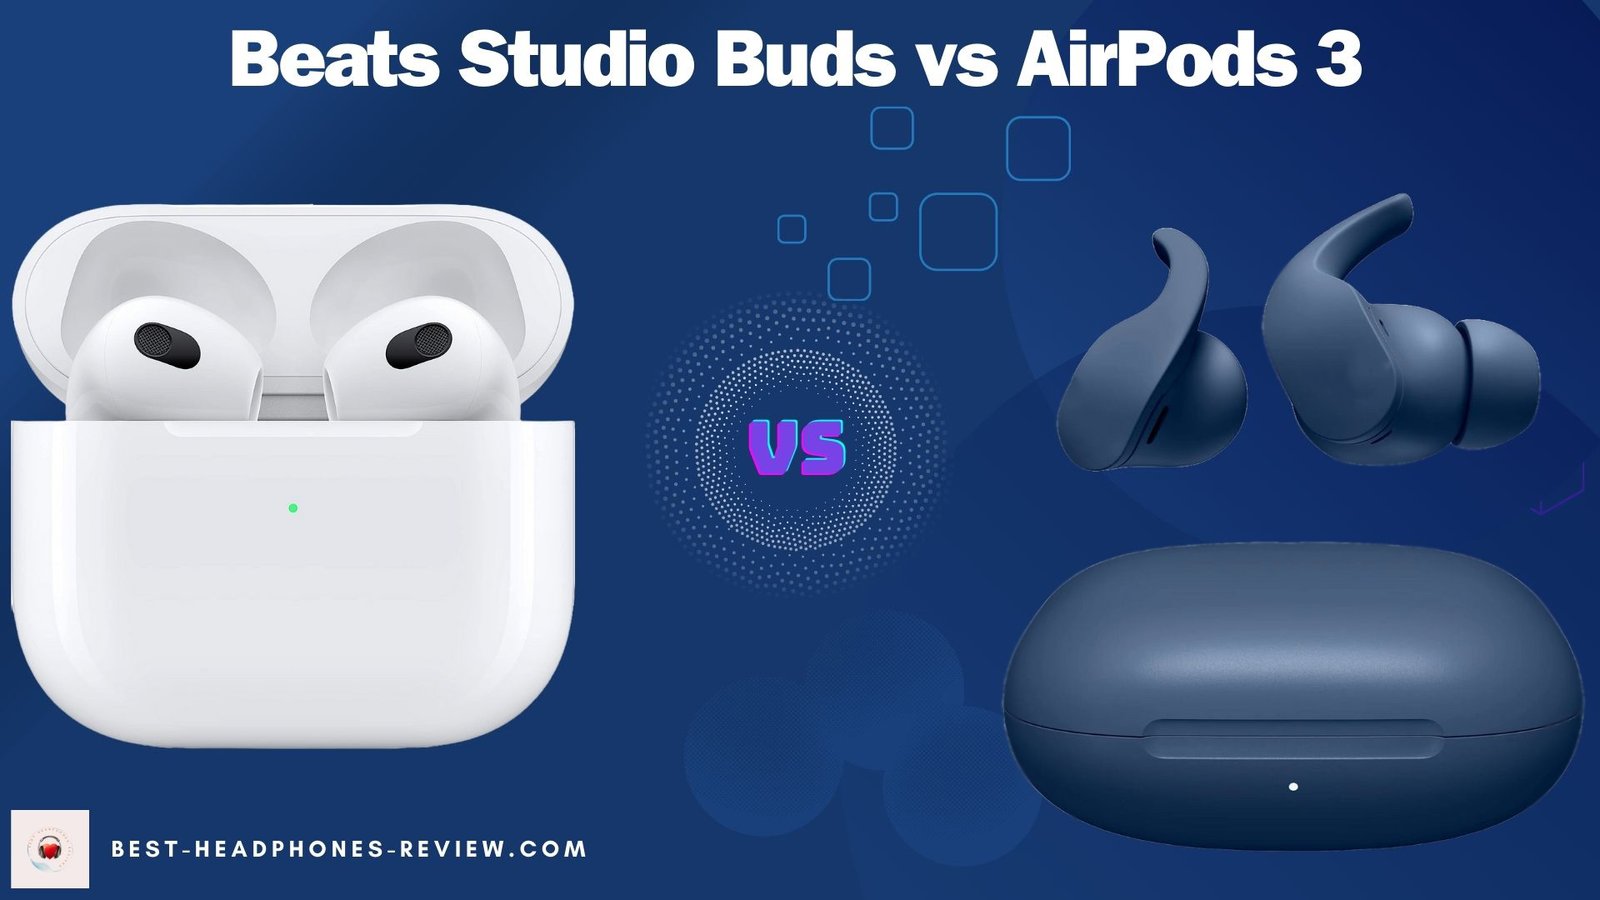 Beats Studio Buds vs. AirPods 3